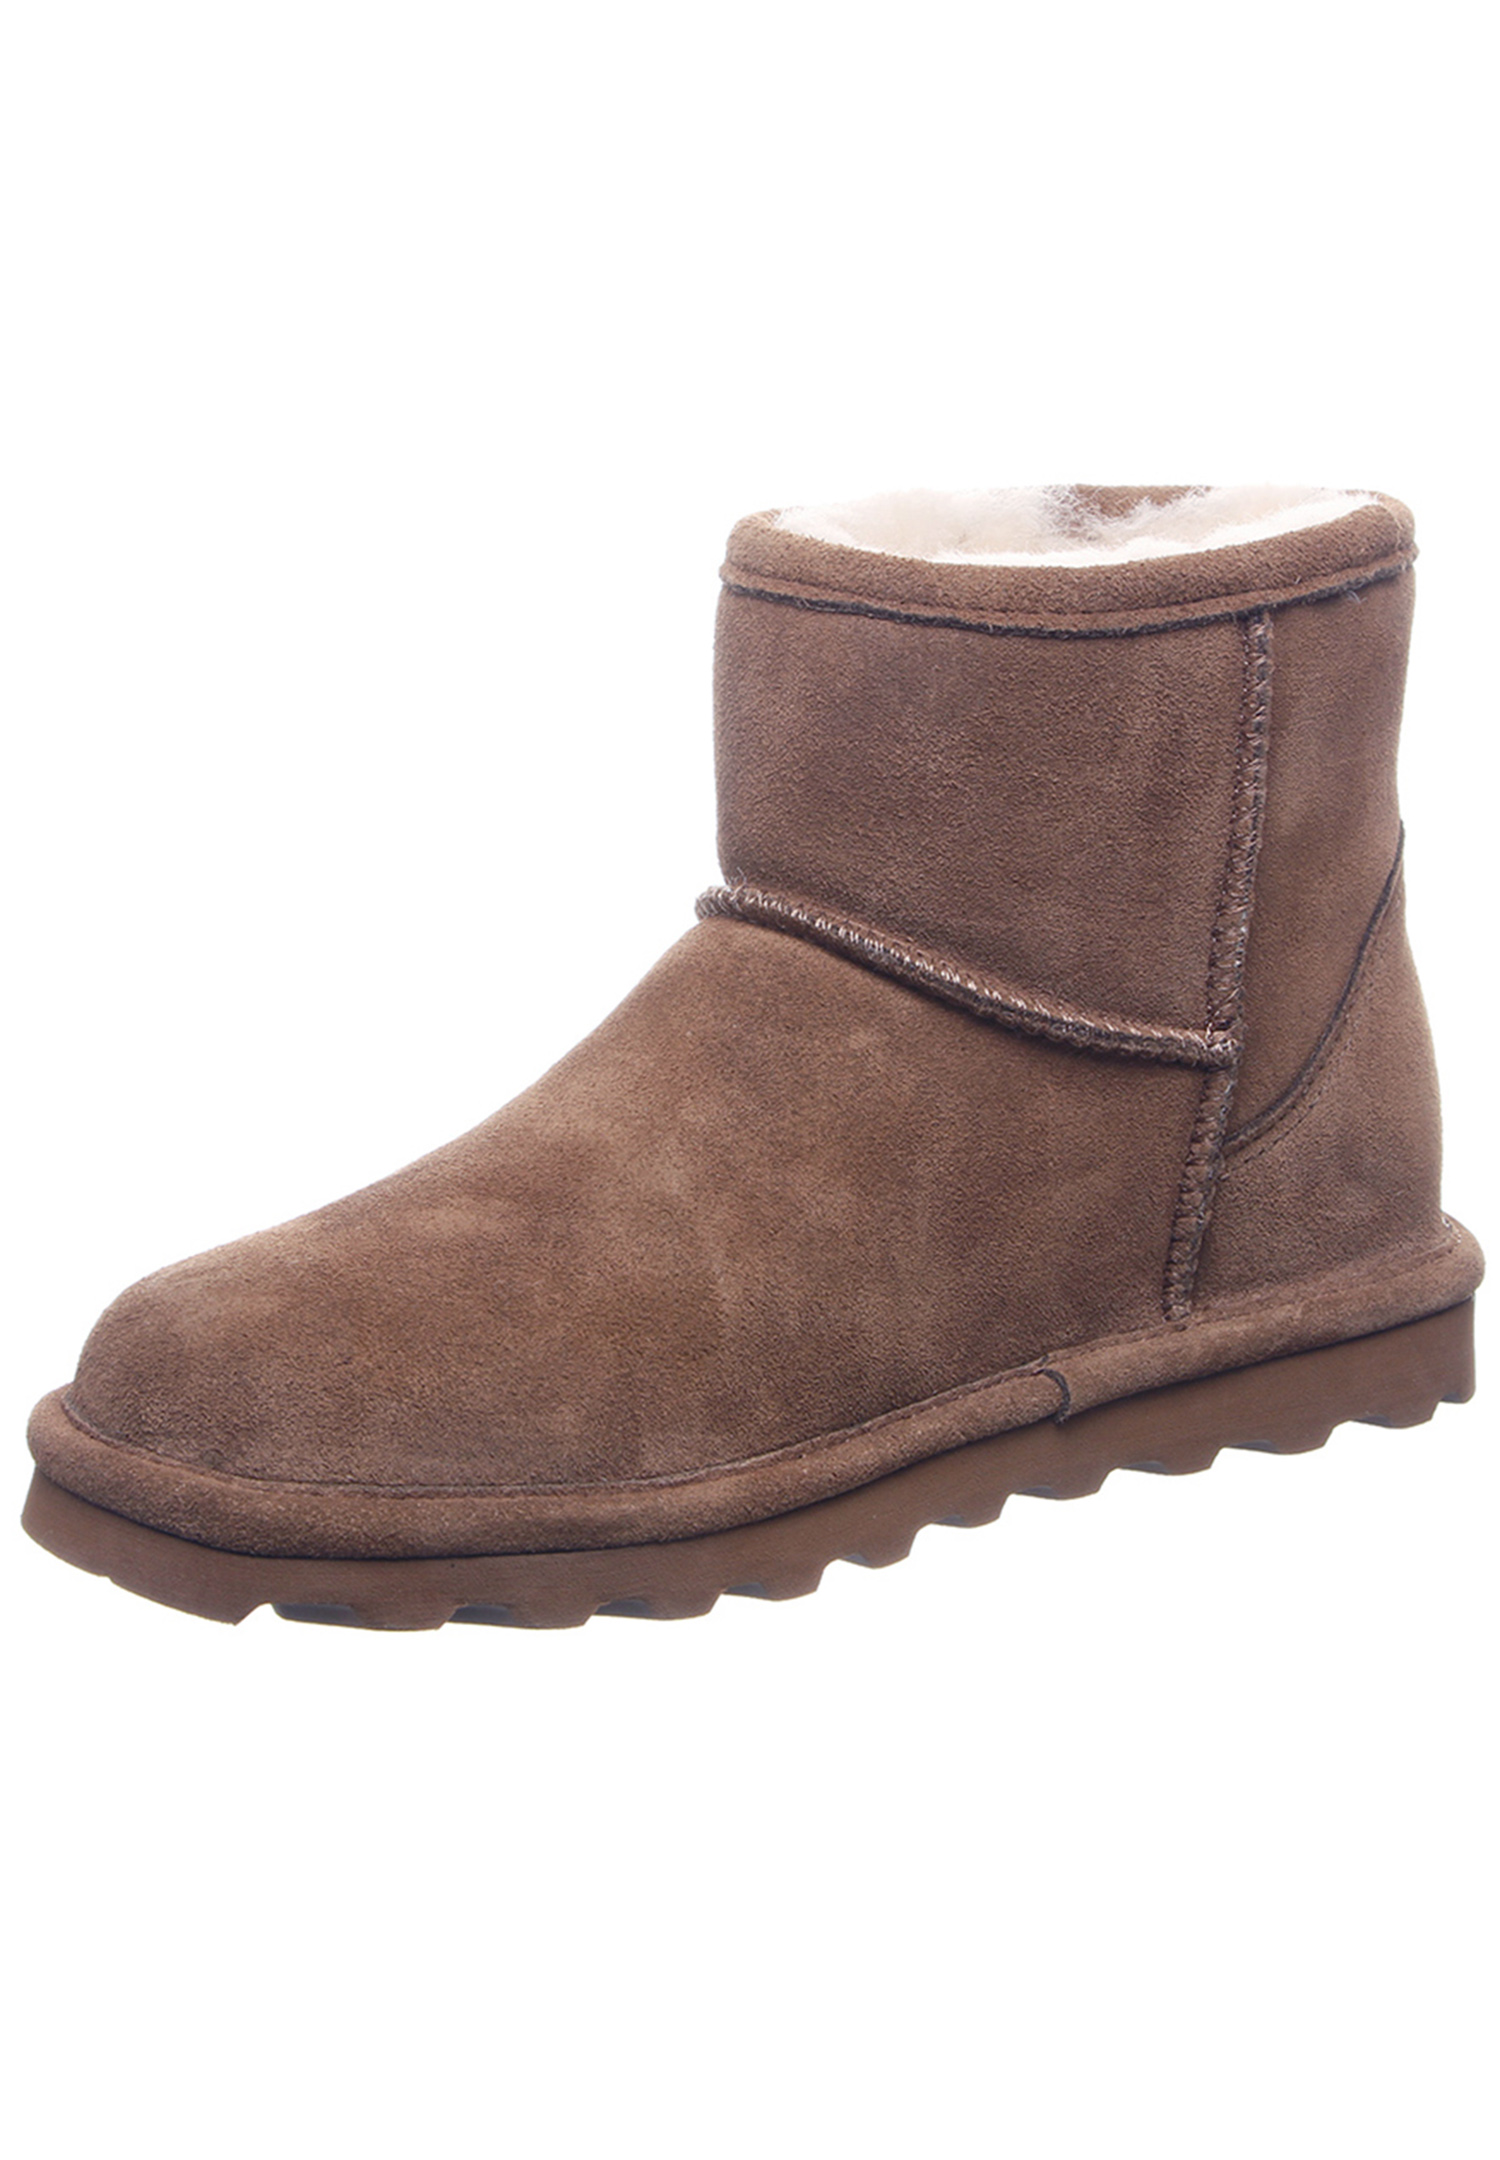 Ботинки Bearpaw Stiefel Alyssa, коричневый ботинки bearpaw stiefel alyssa коричневый